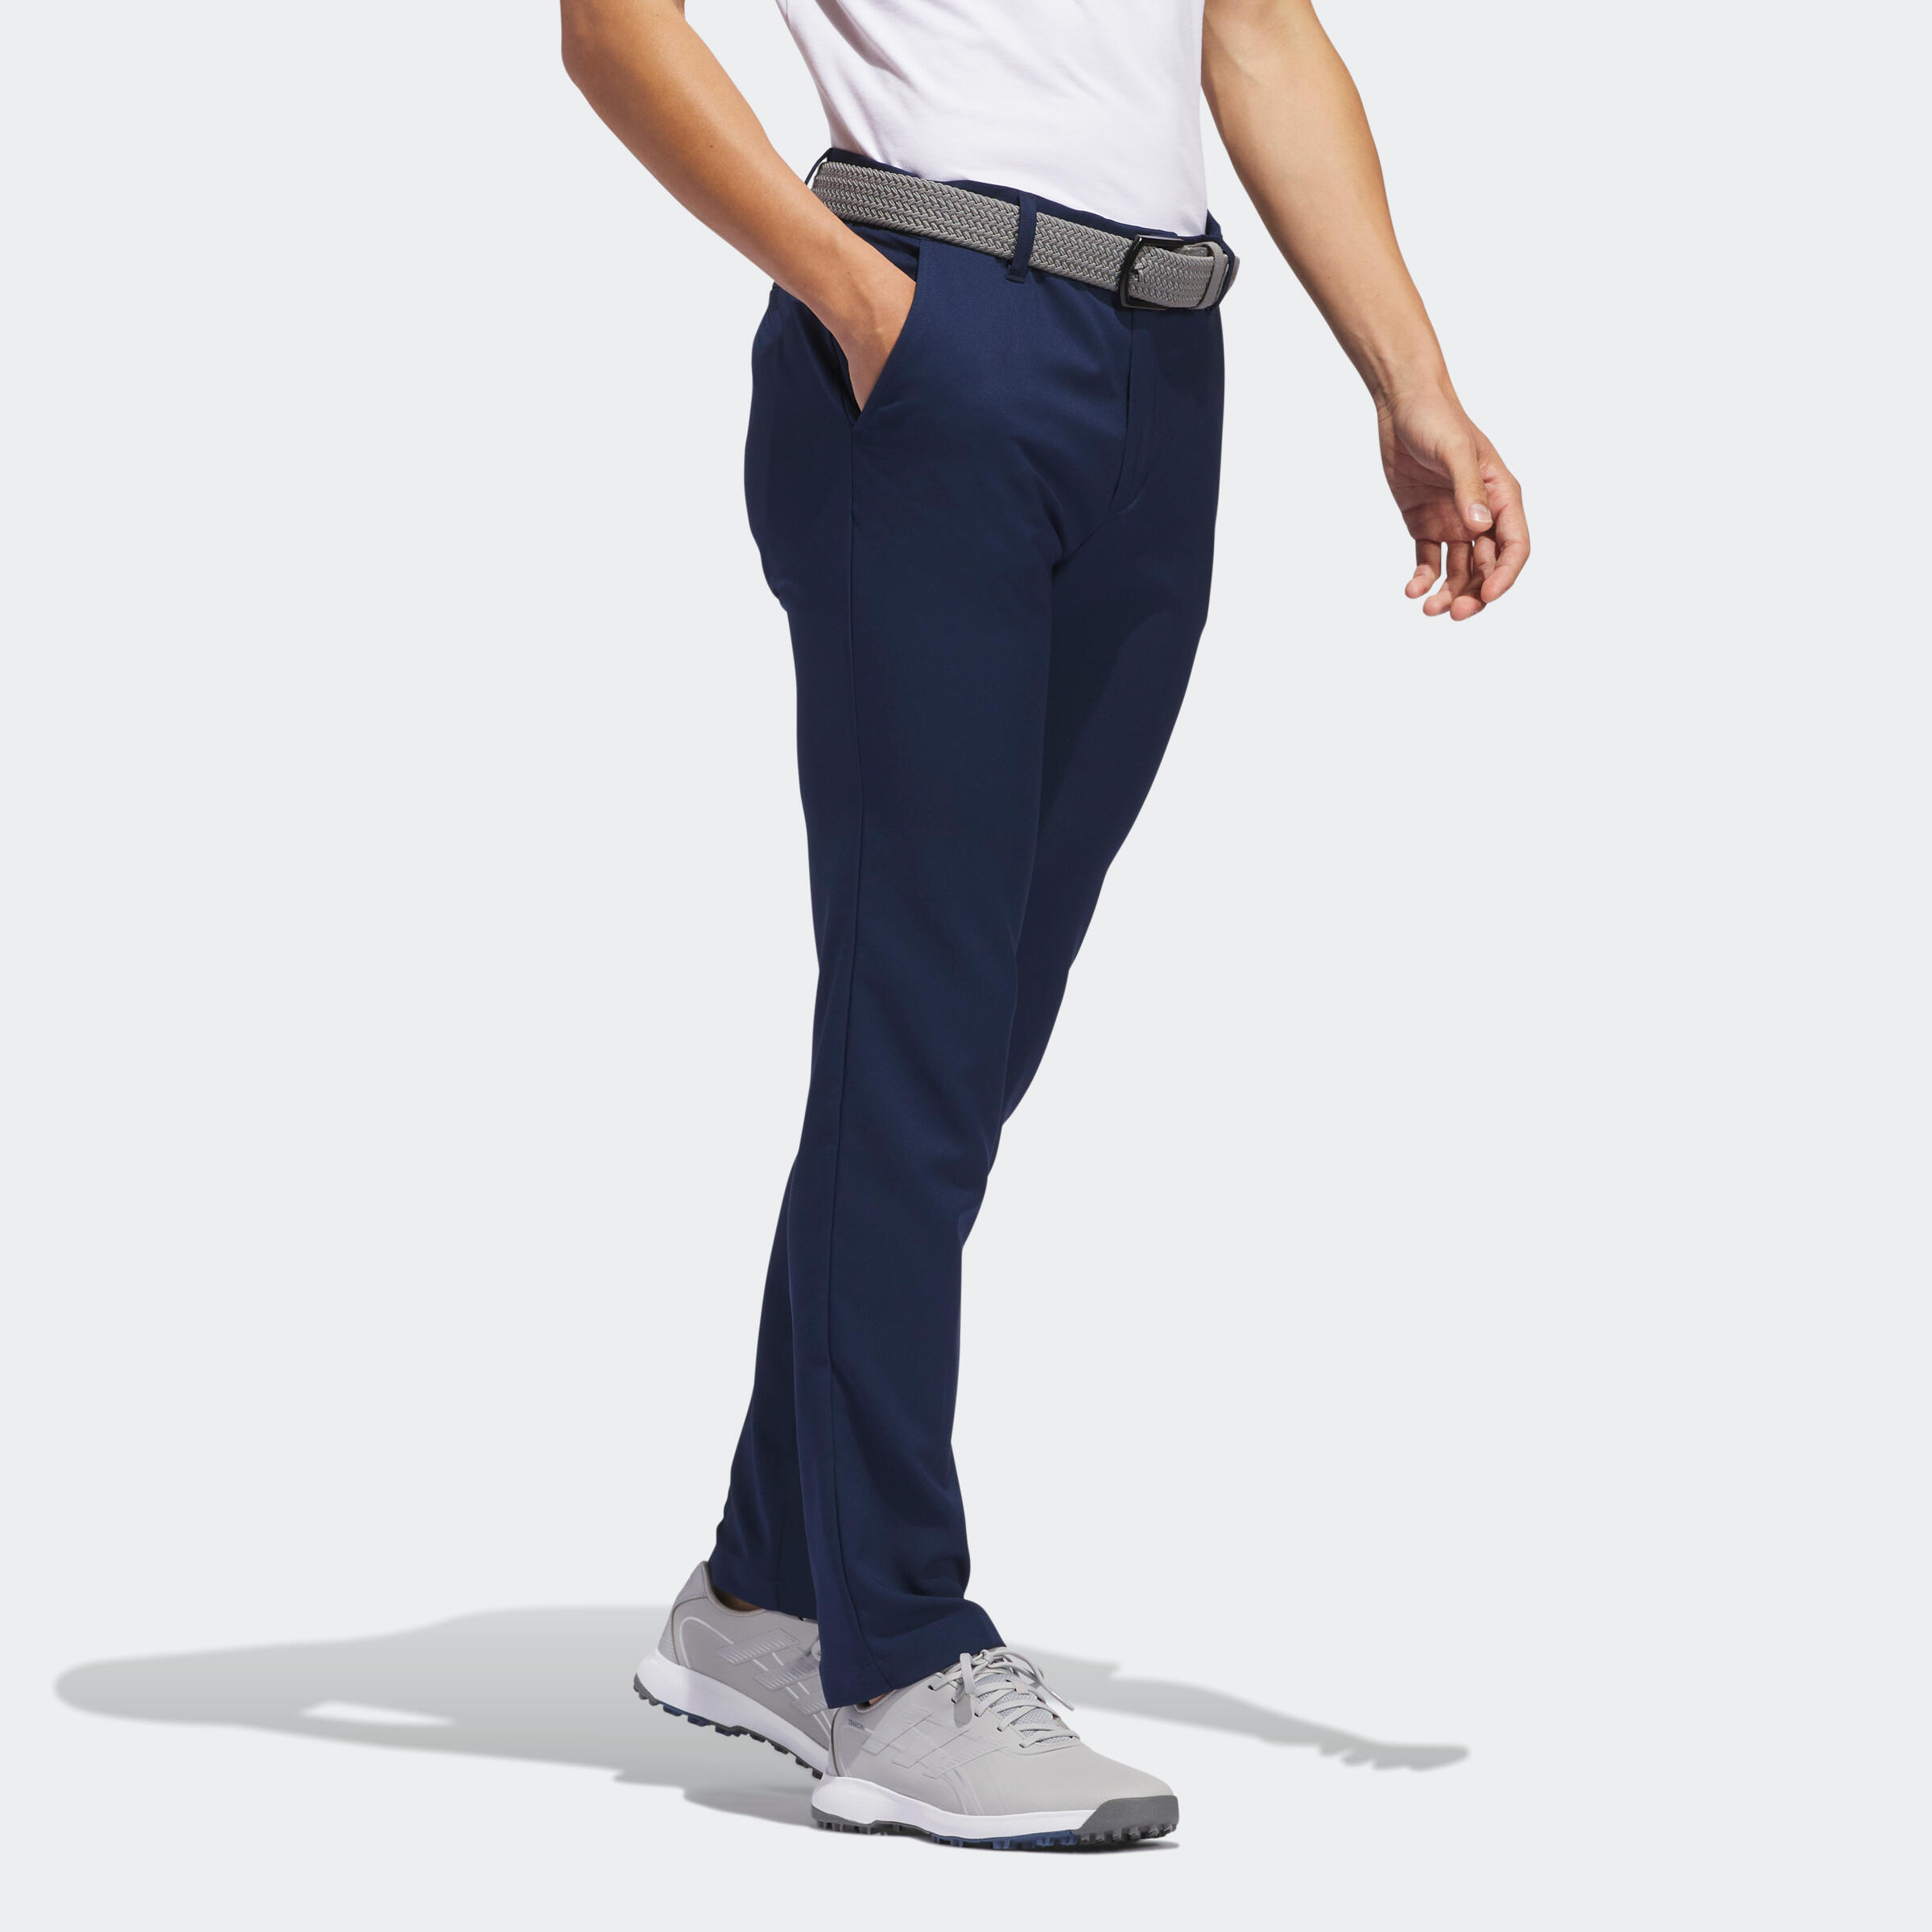 Men's golf trousers - Adidas navy blue 1/4